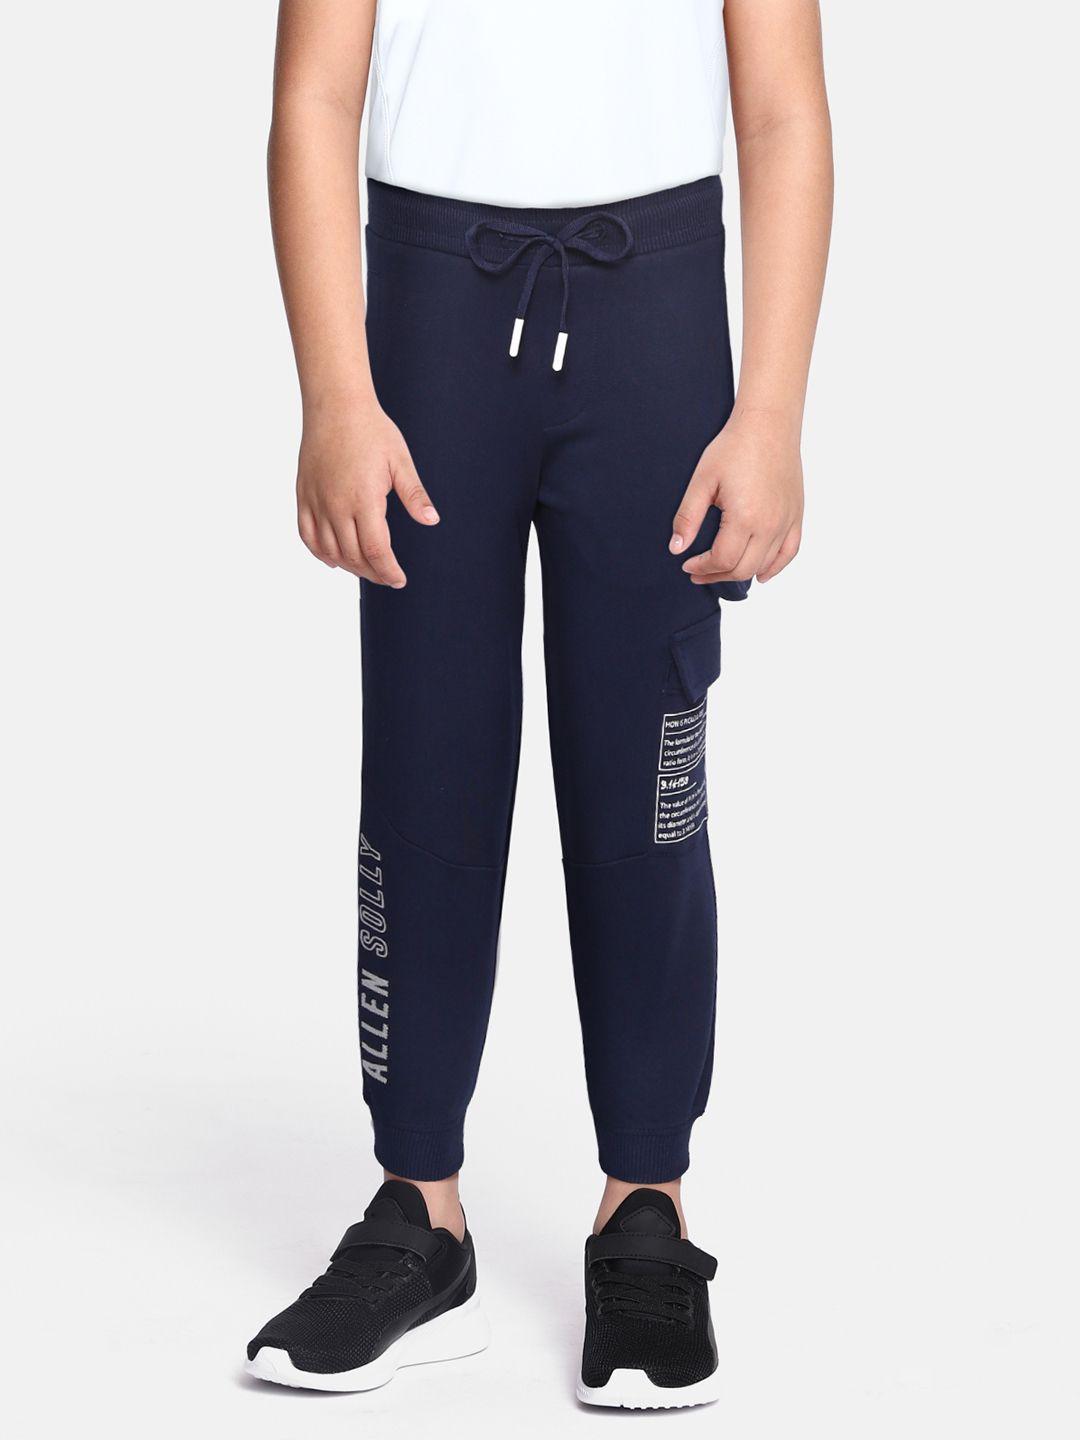 allen solly junior boys navy blue & white brand logo print pure cotton joggers